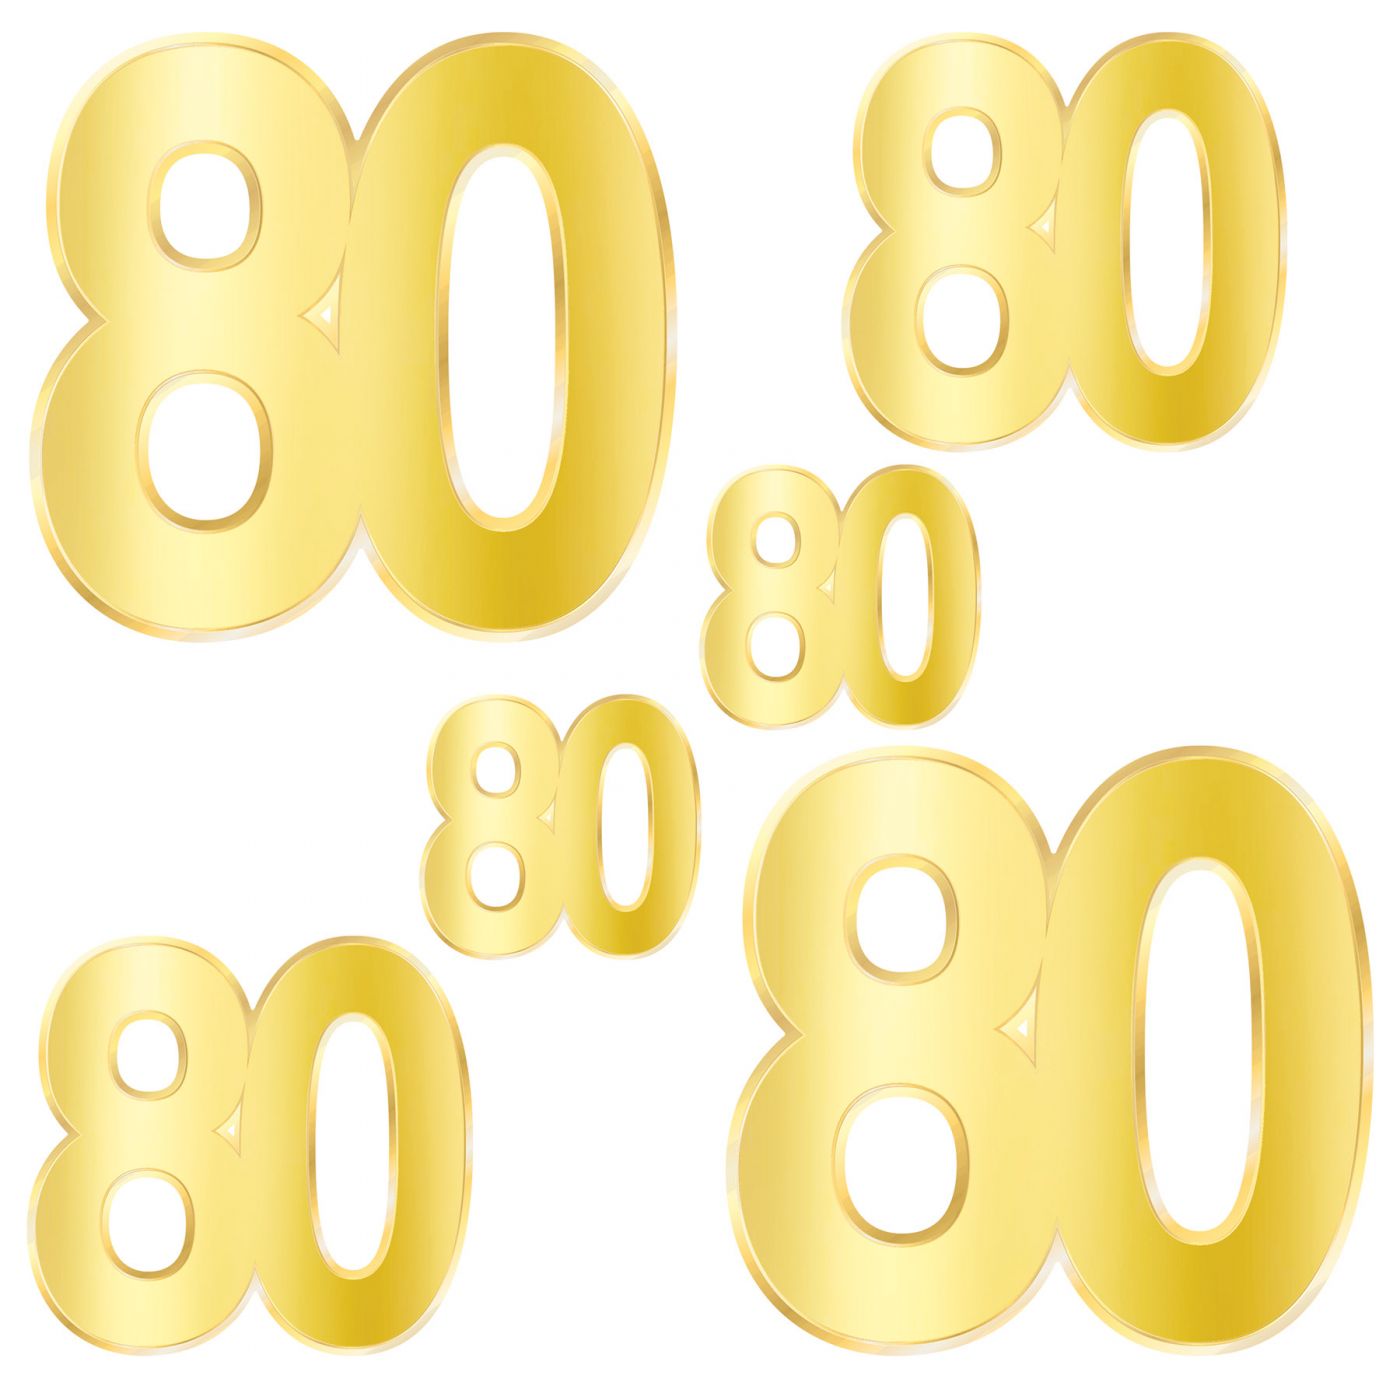 Foil 80 Birthday Cutouts (12) image